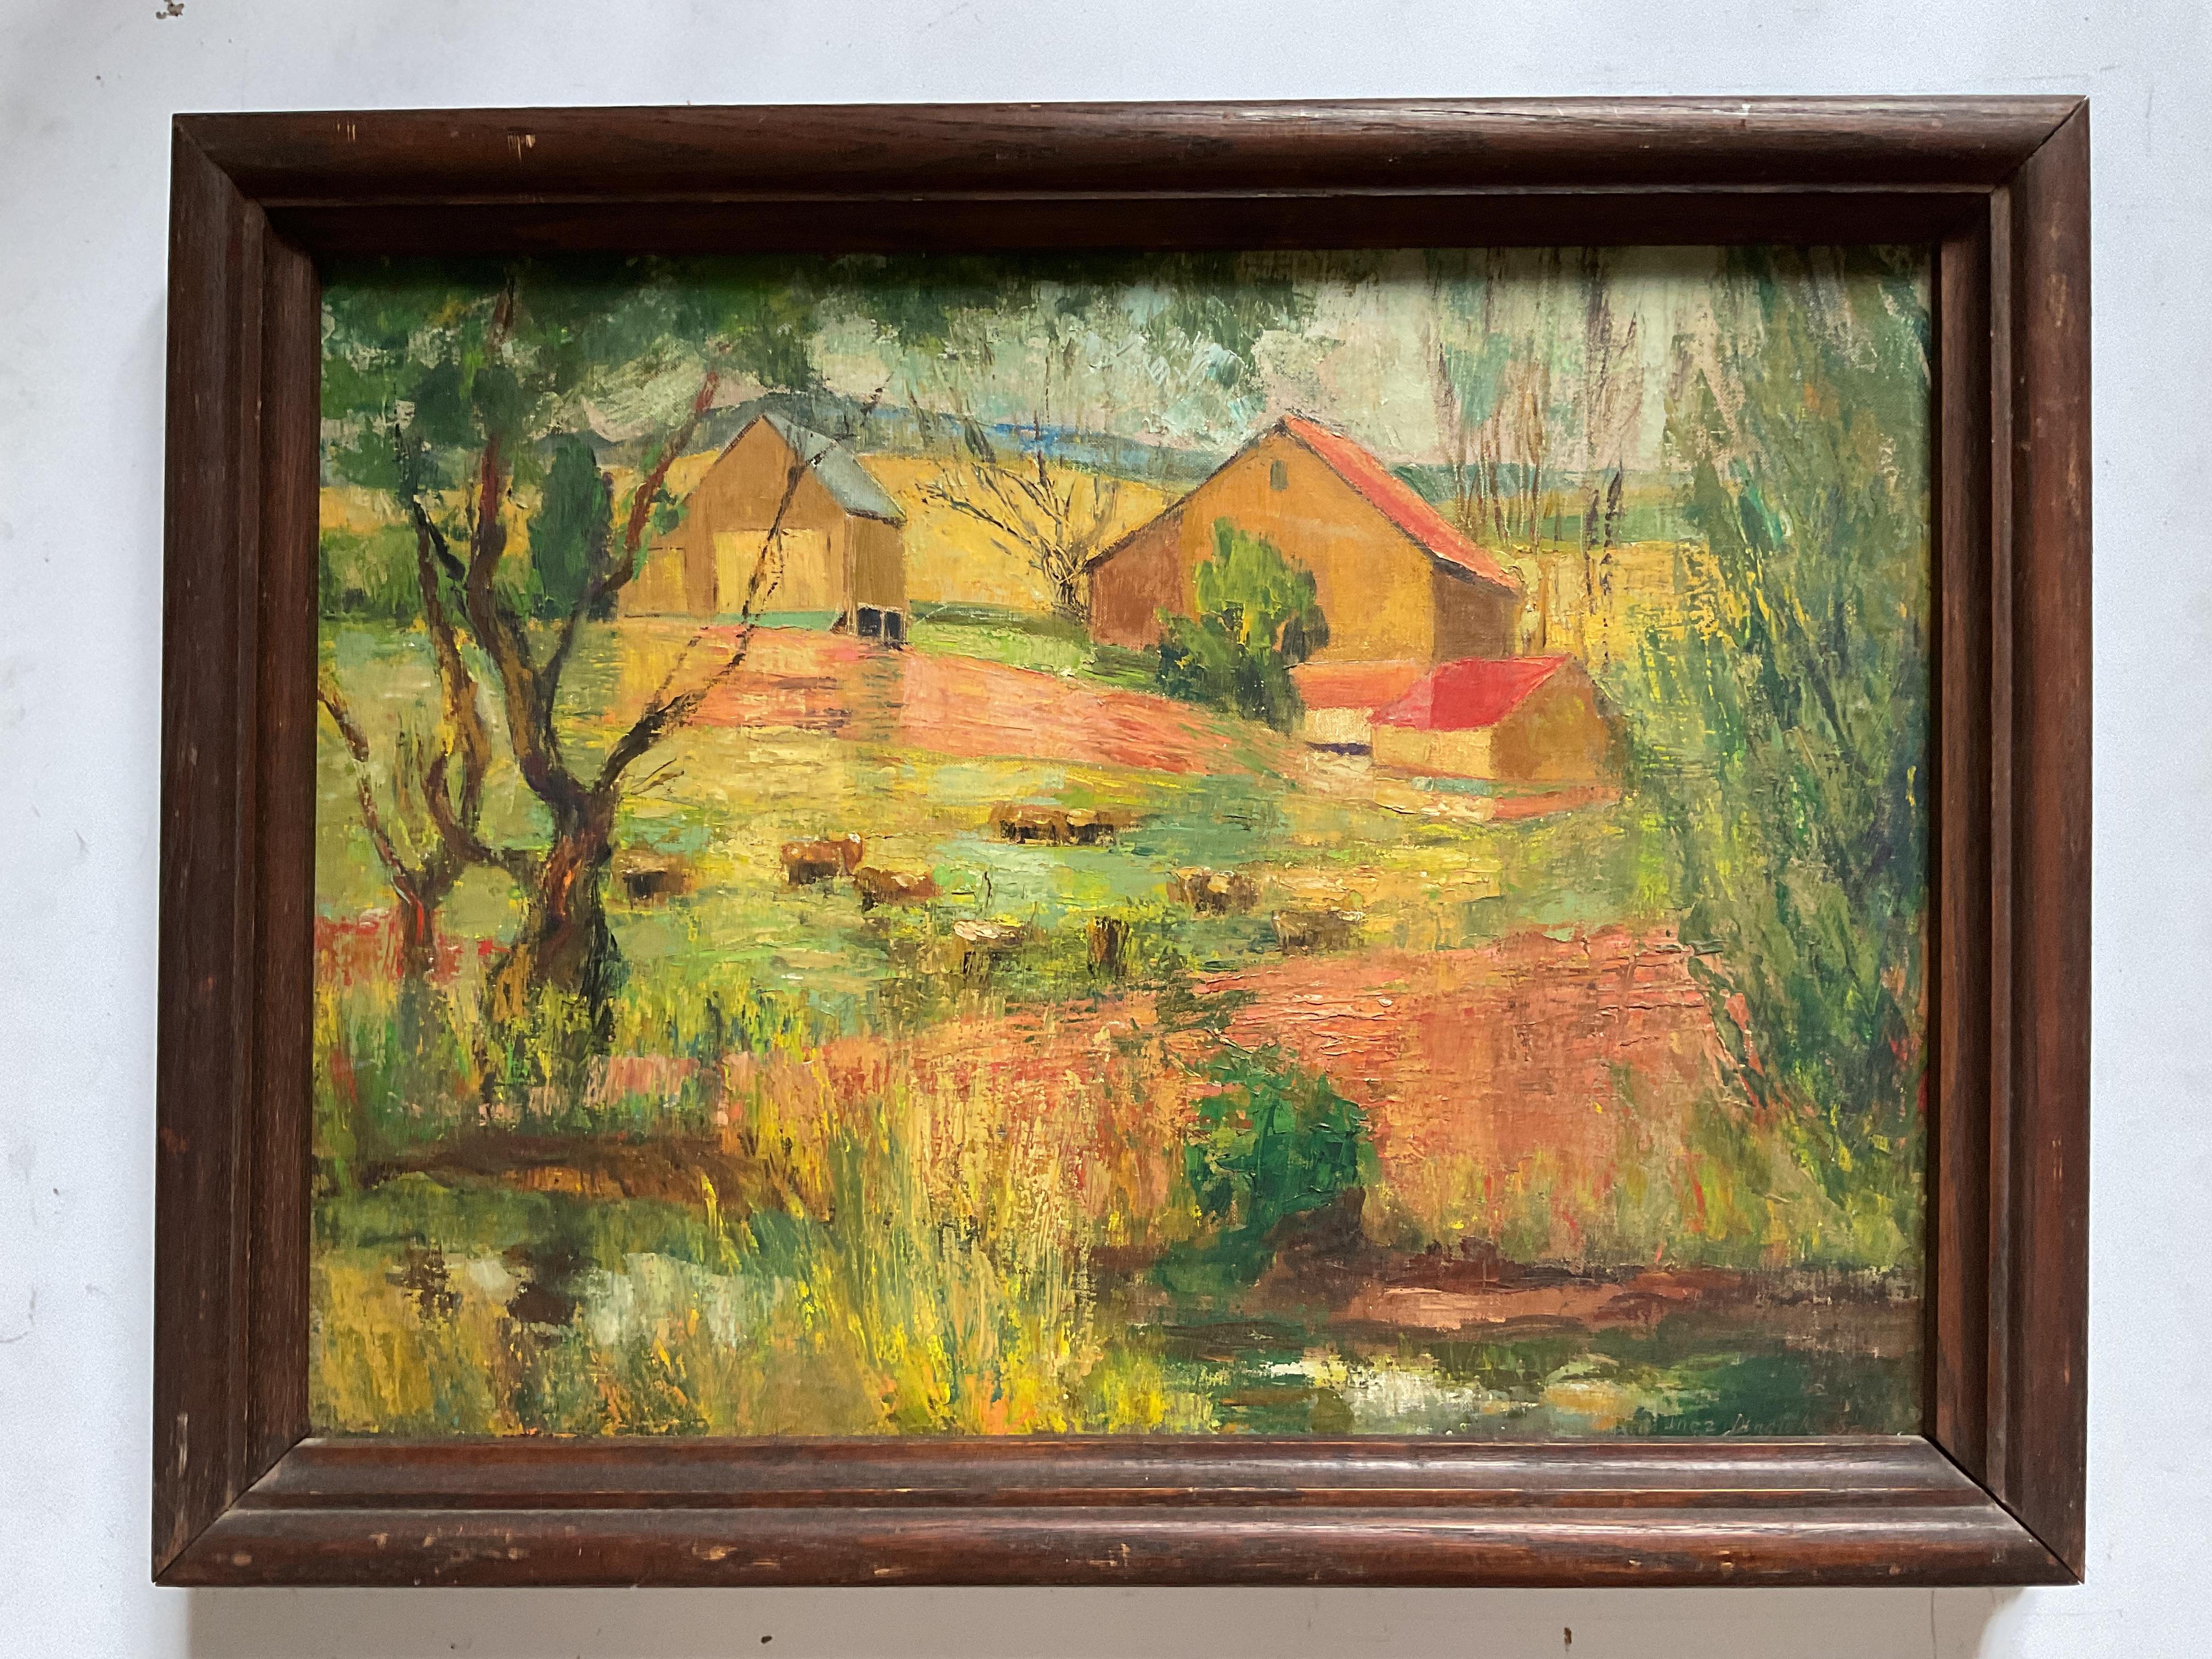 Inez Dunnick Smith Landscape Painting - Vintage American Pennsylvania Farm Landscape; Signed Oil on Canvas, ca 1940’s